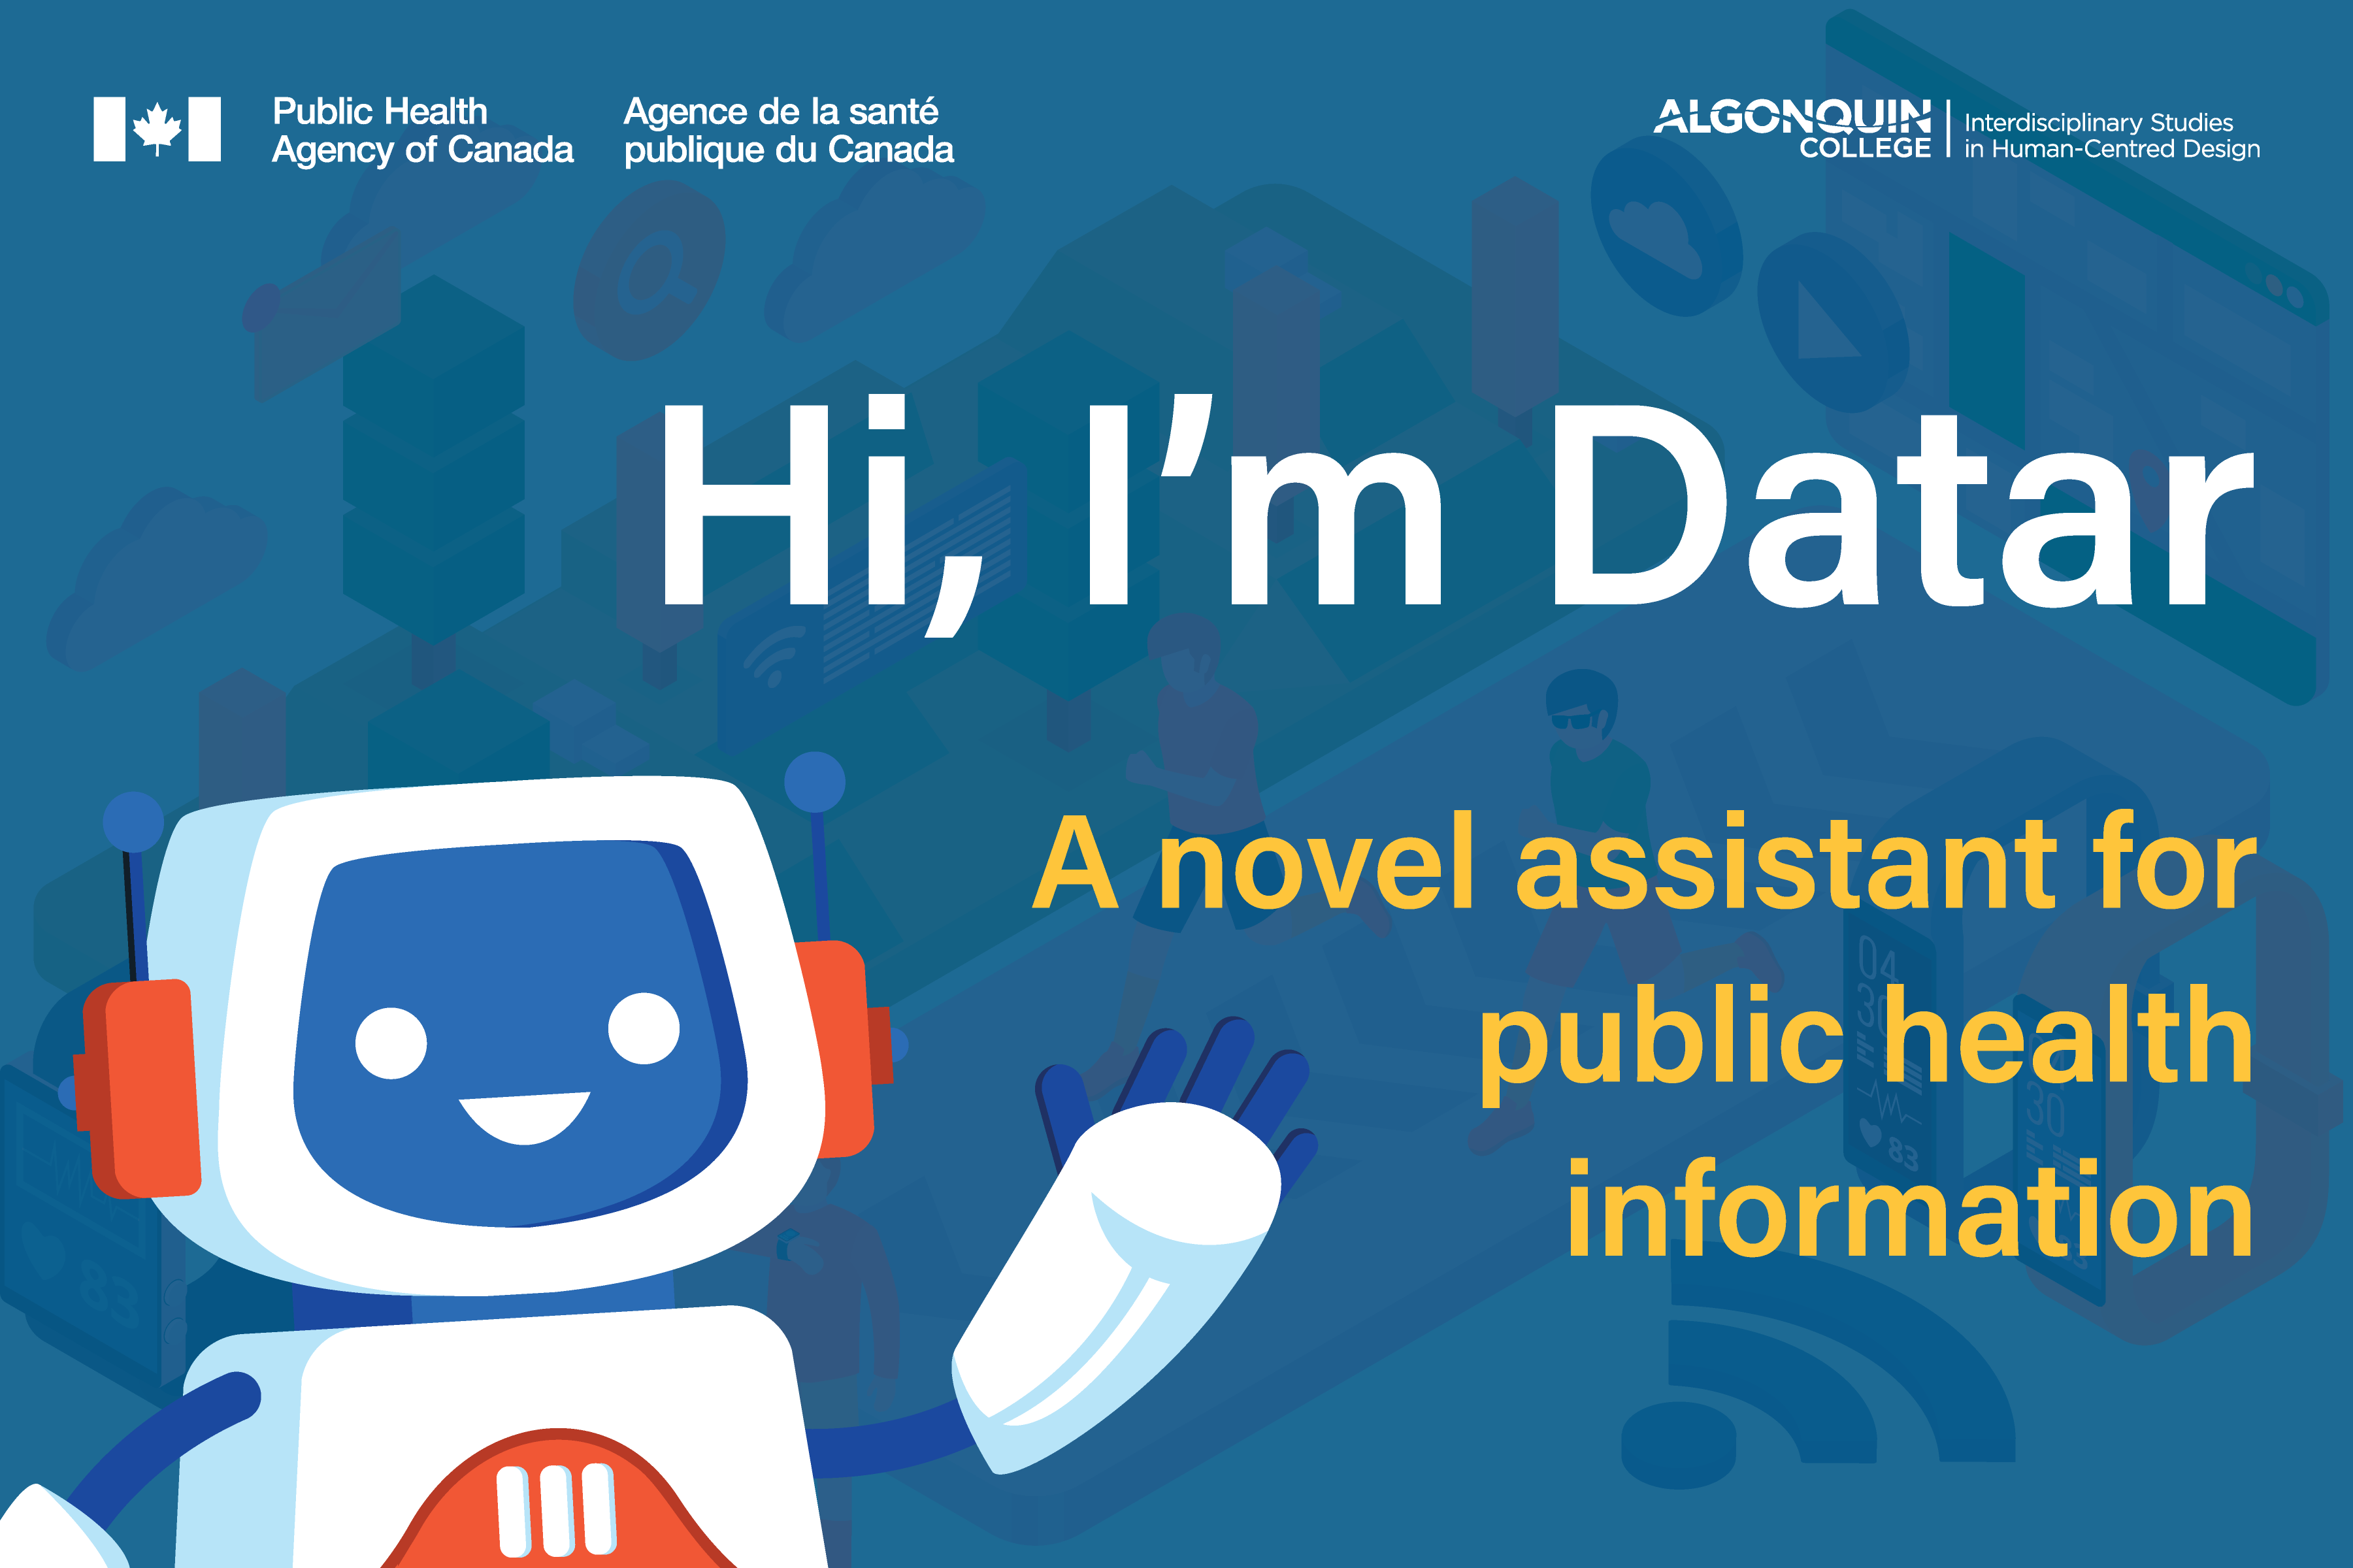 A novel assistant for public health information